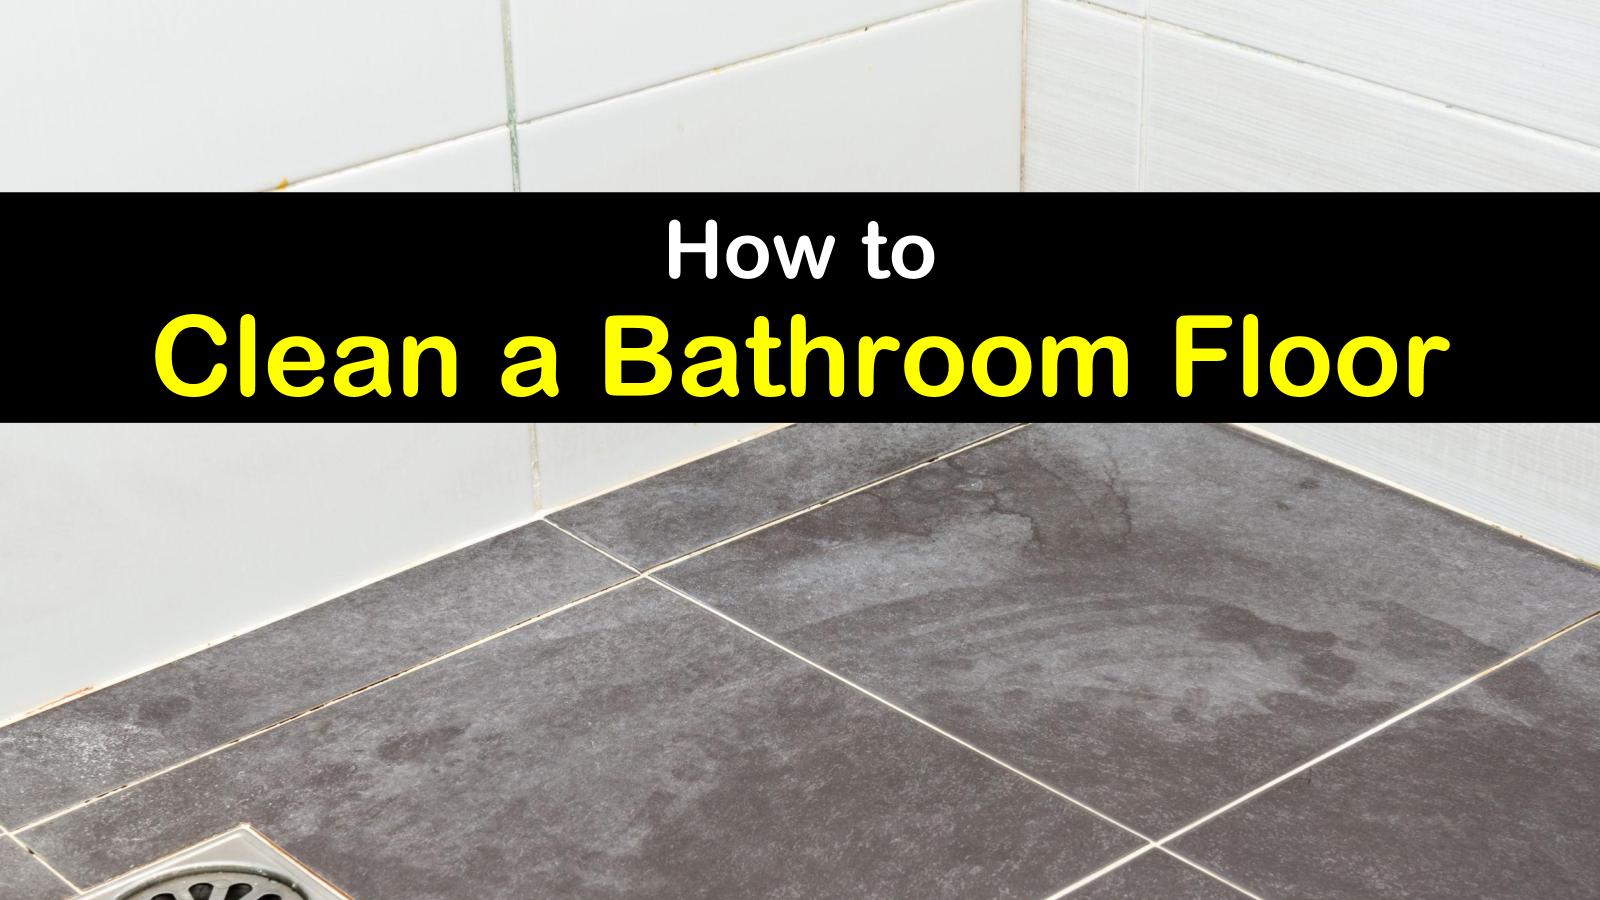 4 Simple Ways To Clean A Bathroom Floor - How To Clean Slippery Bathroom Floor